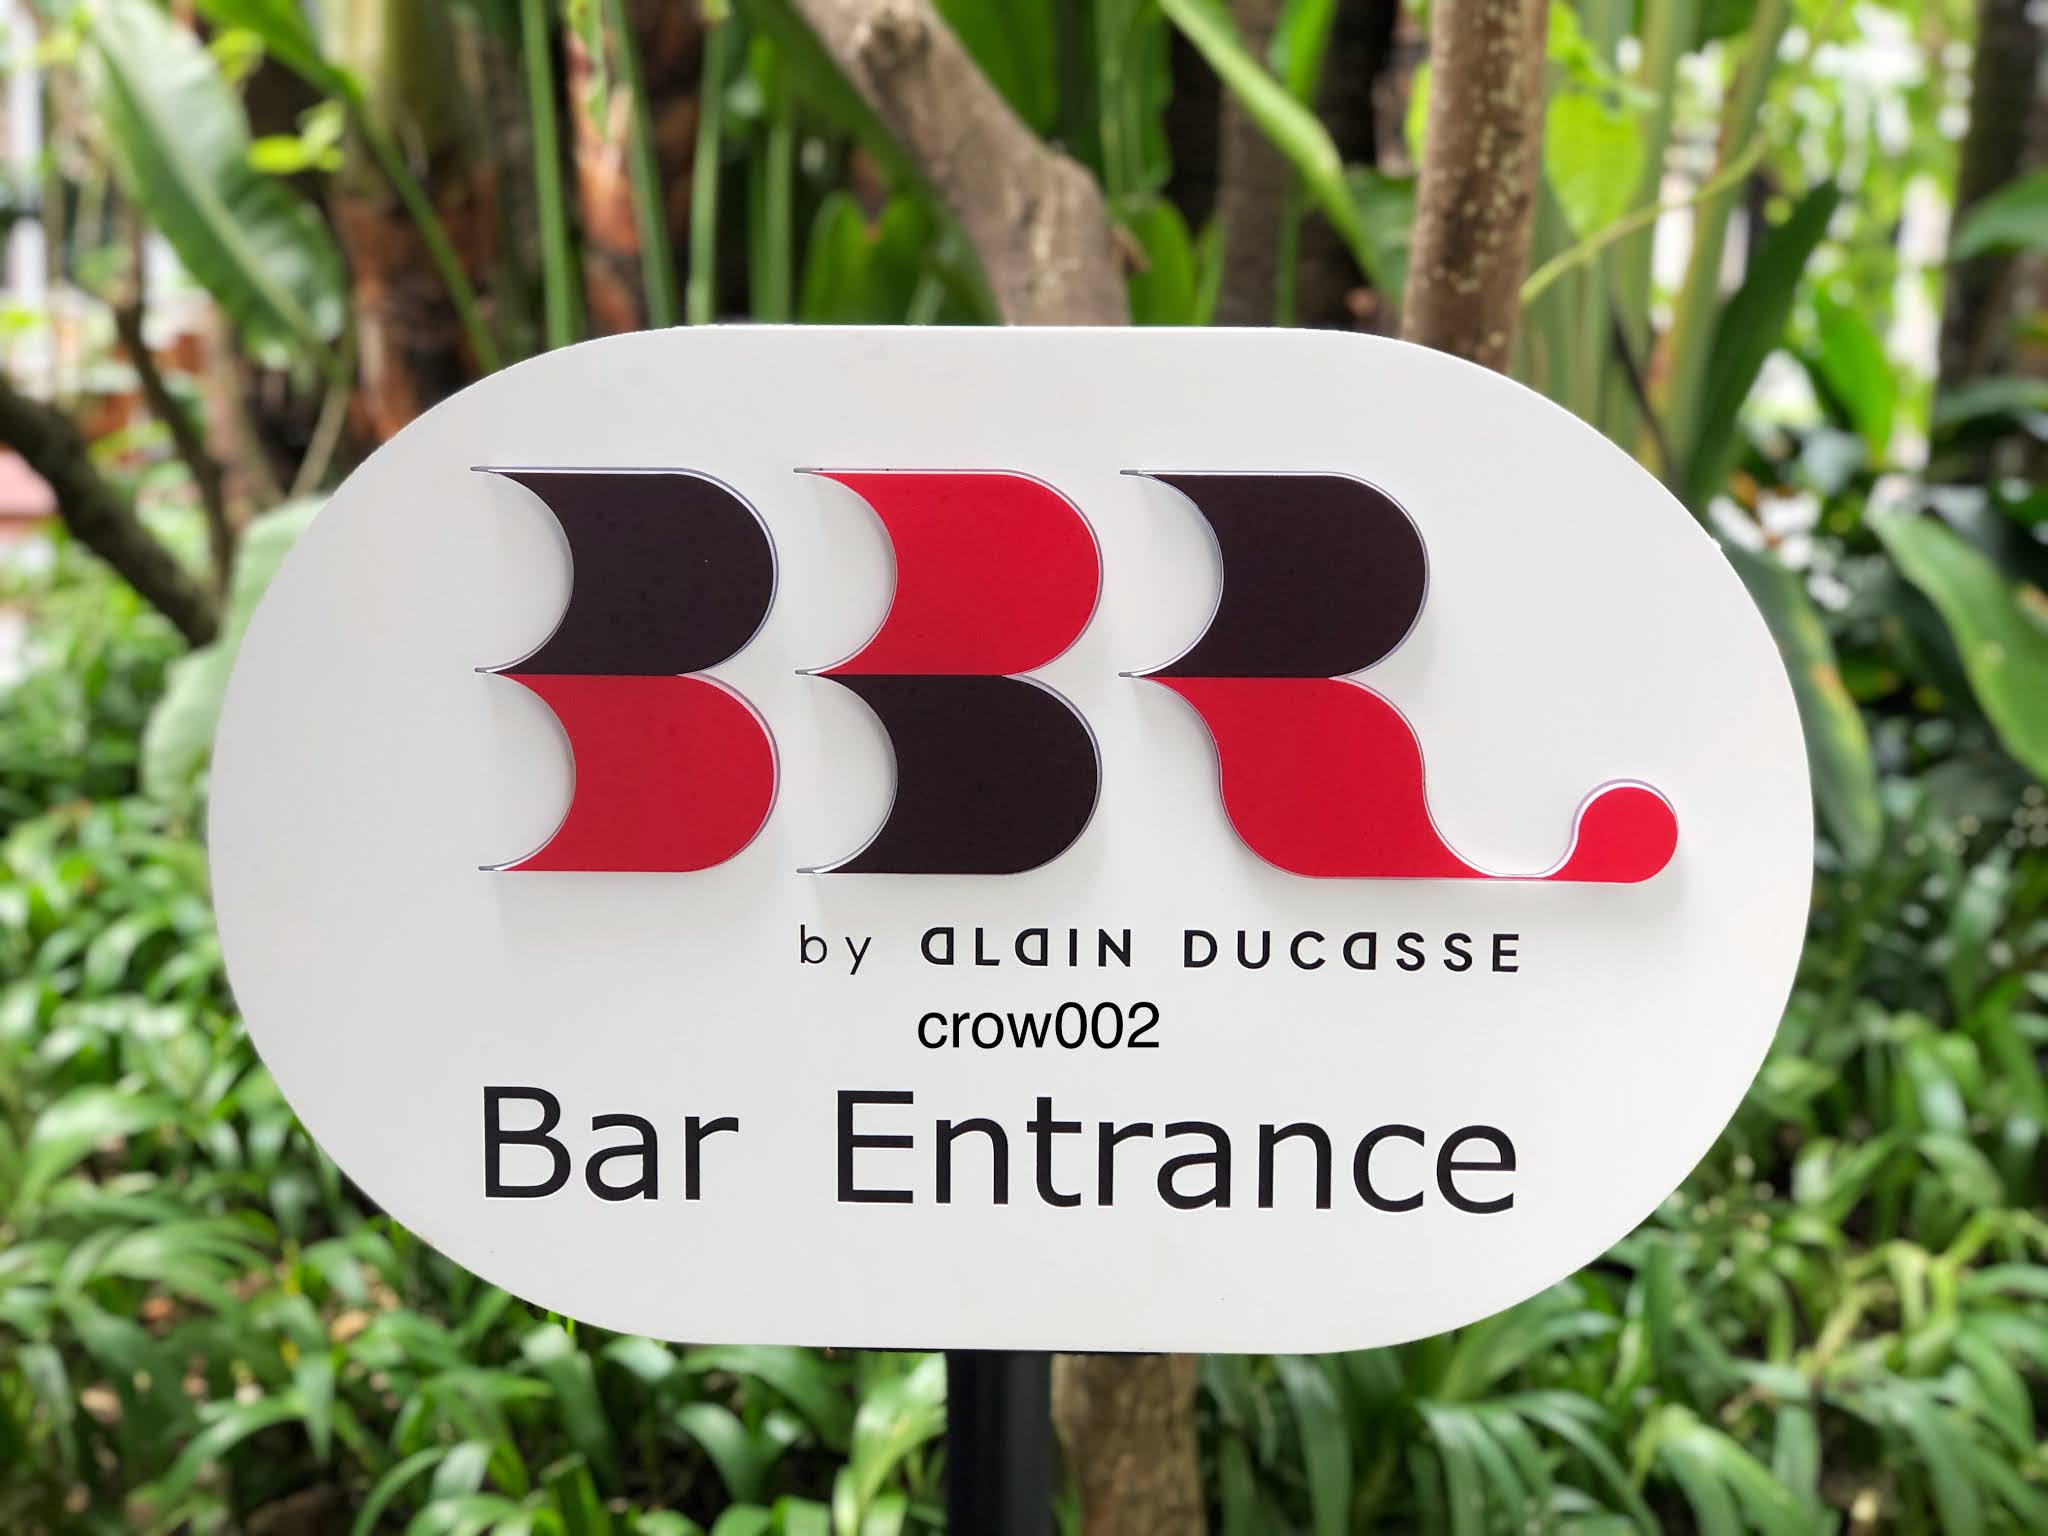 BBR by ALAIN DUCASSE at RAFFLES SINGAPORE - 래플스 싱가포르 BBR 바이 알랭 뒤카스 런치 2020년 1월